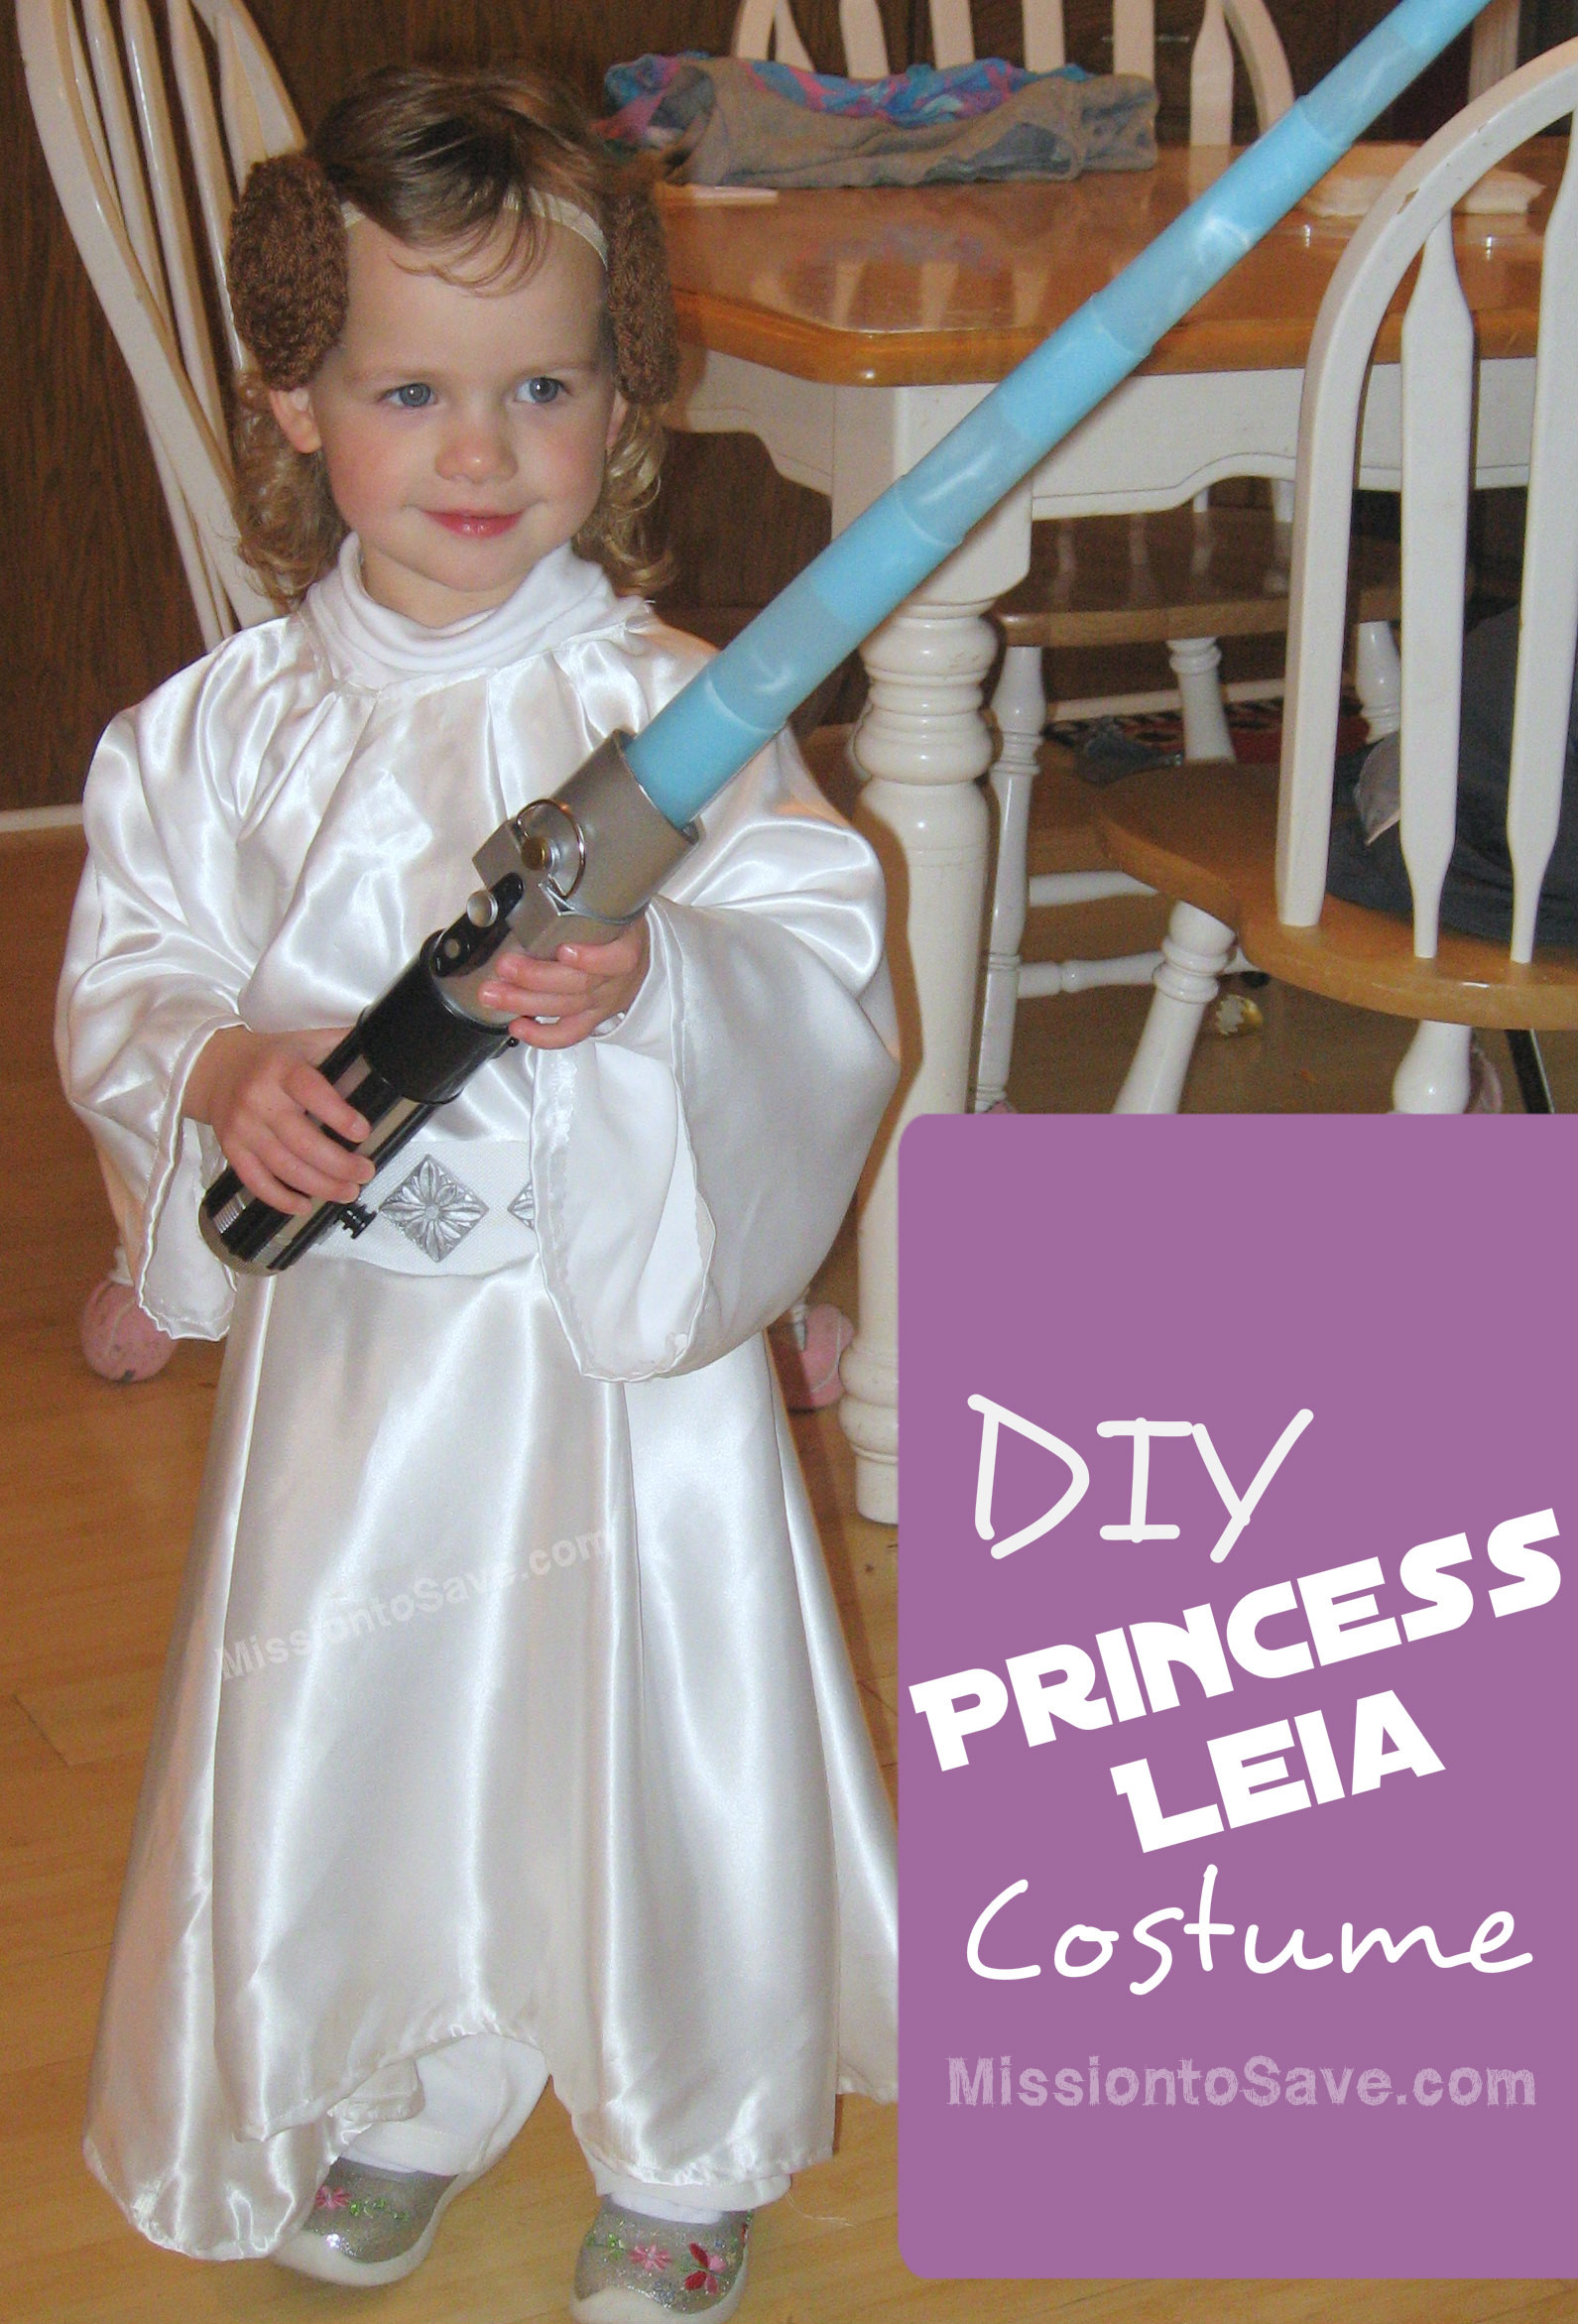 DIY Leia Costume
 DIY Star Wars Costumes Jedi and Princess Leia Mission